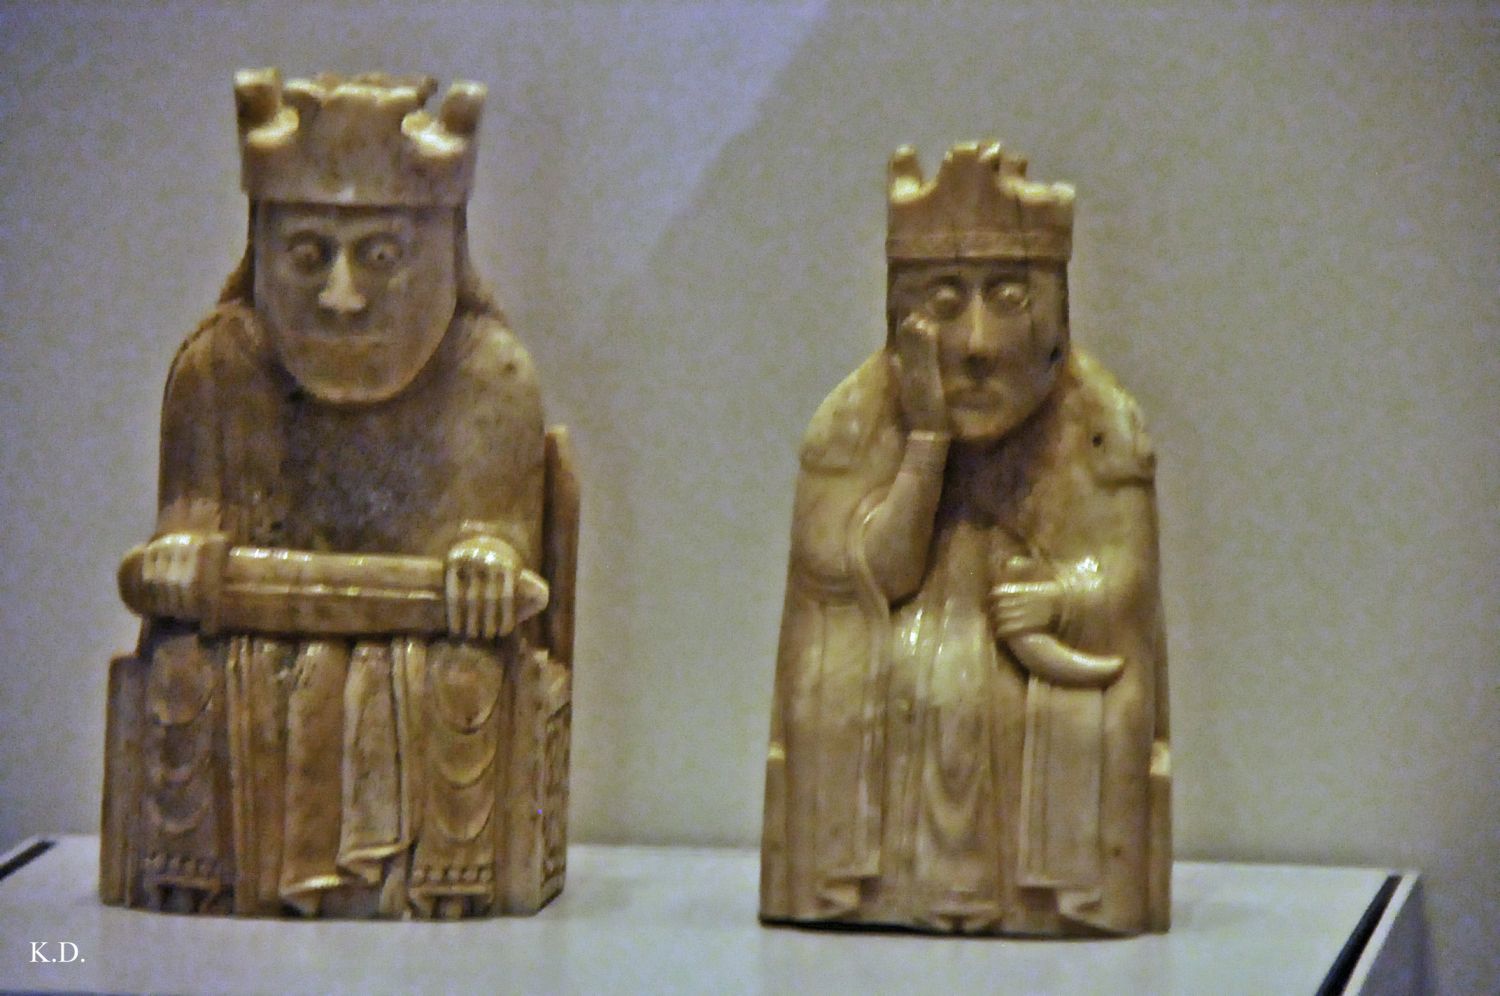 Lewis-Schachfiguren (British Museum-London)